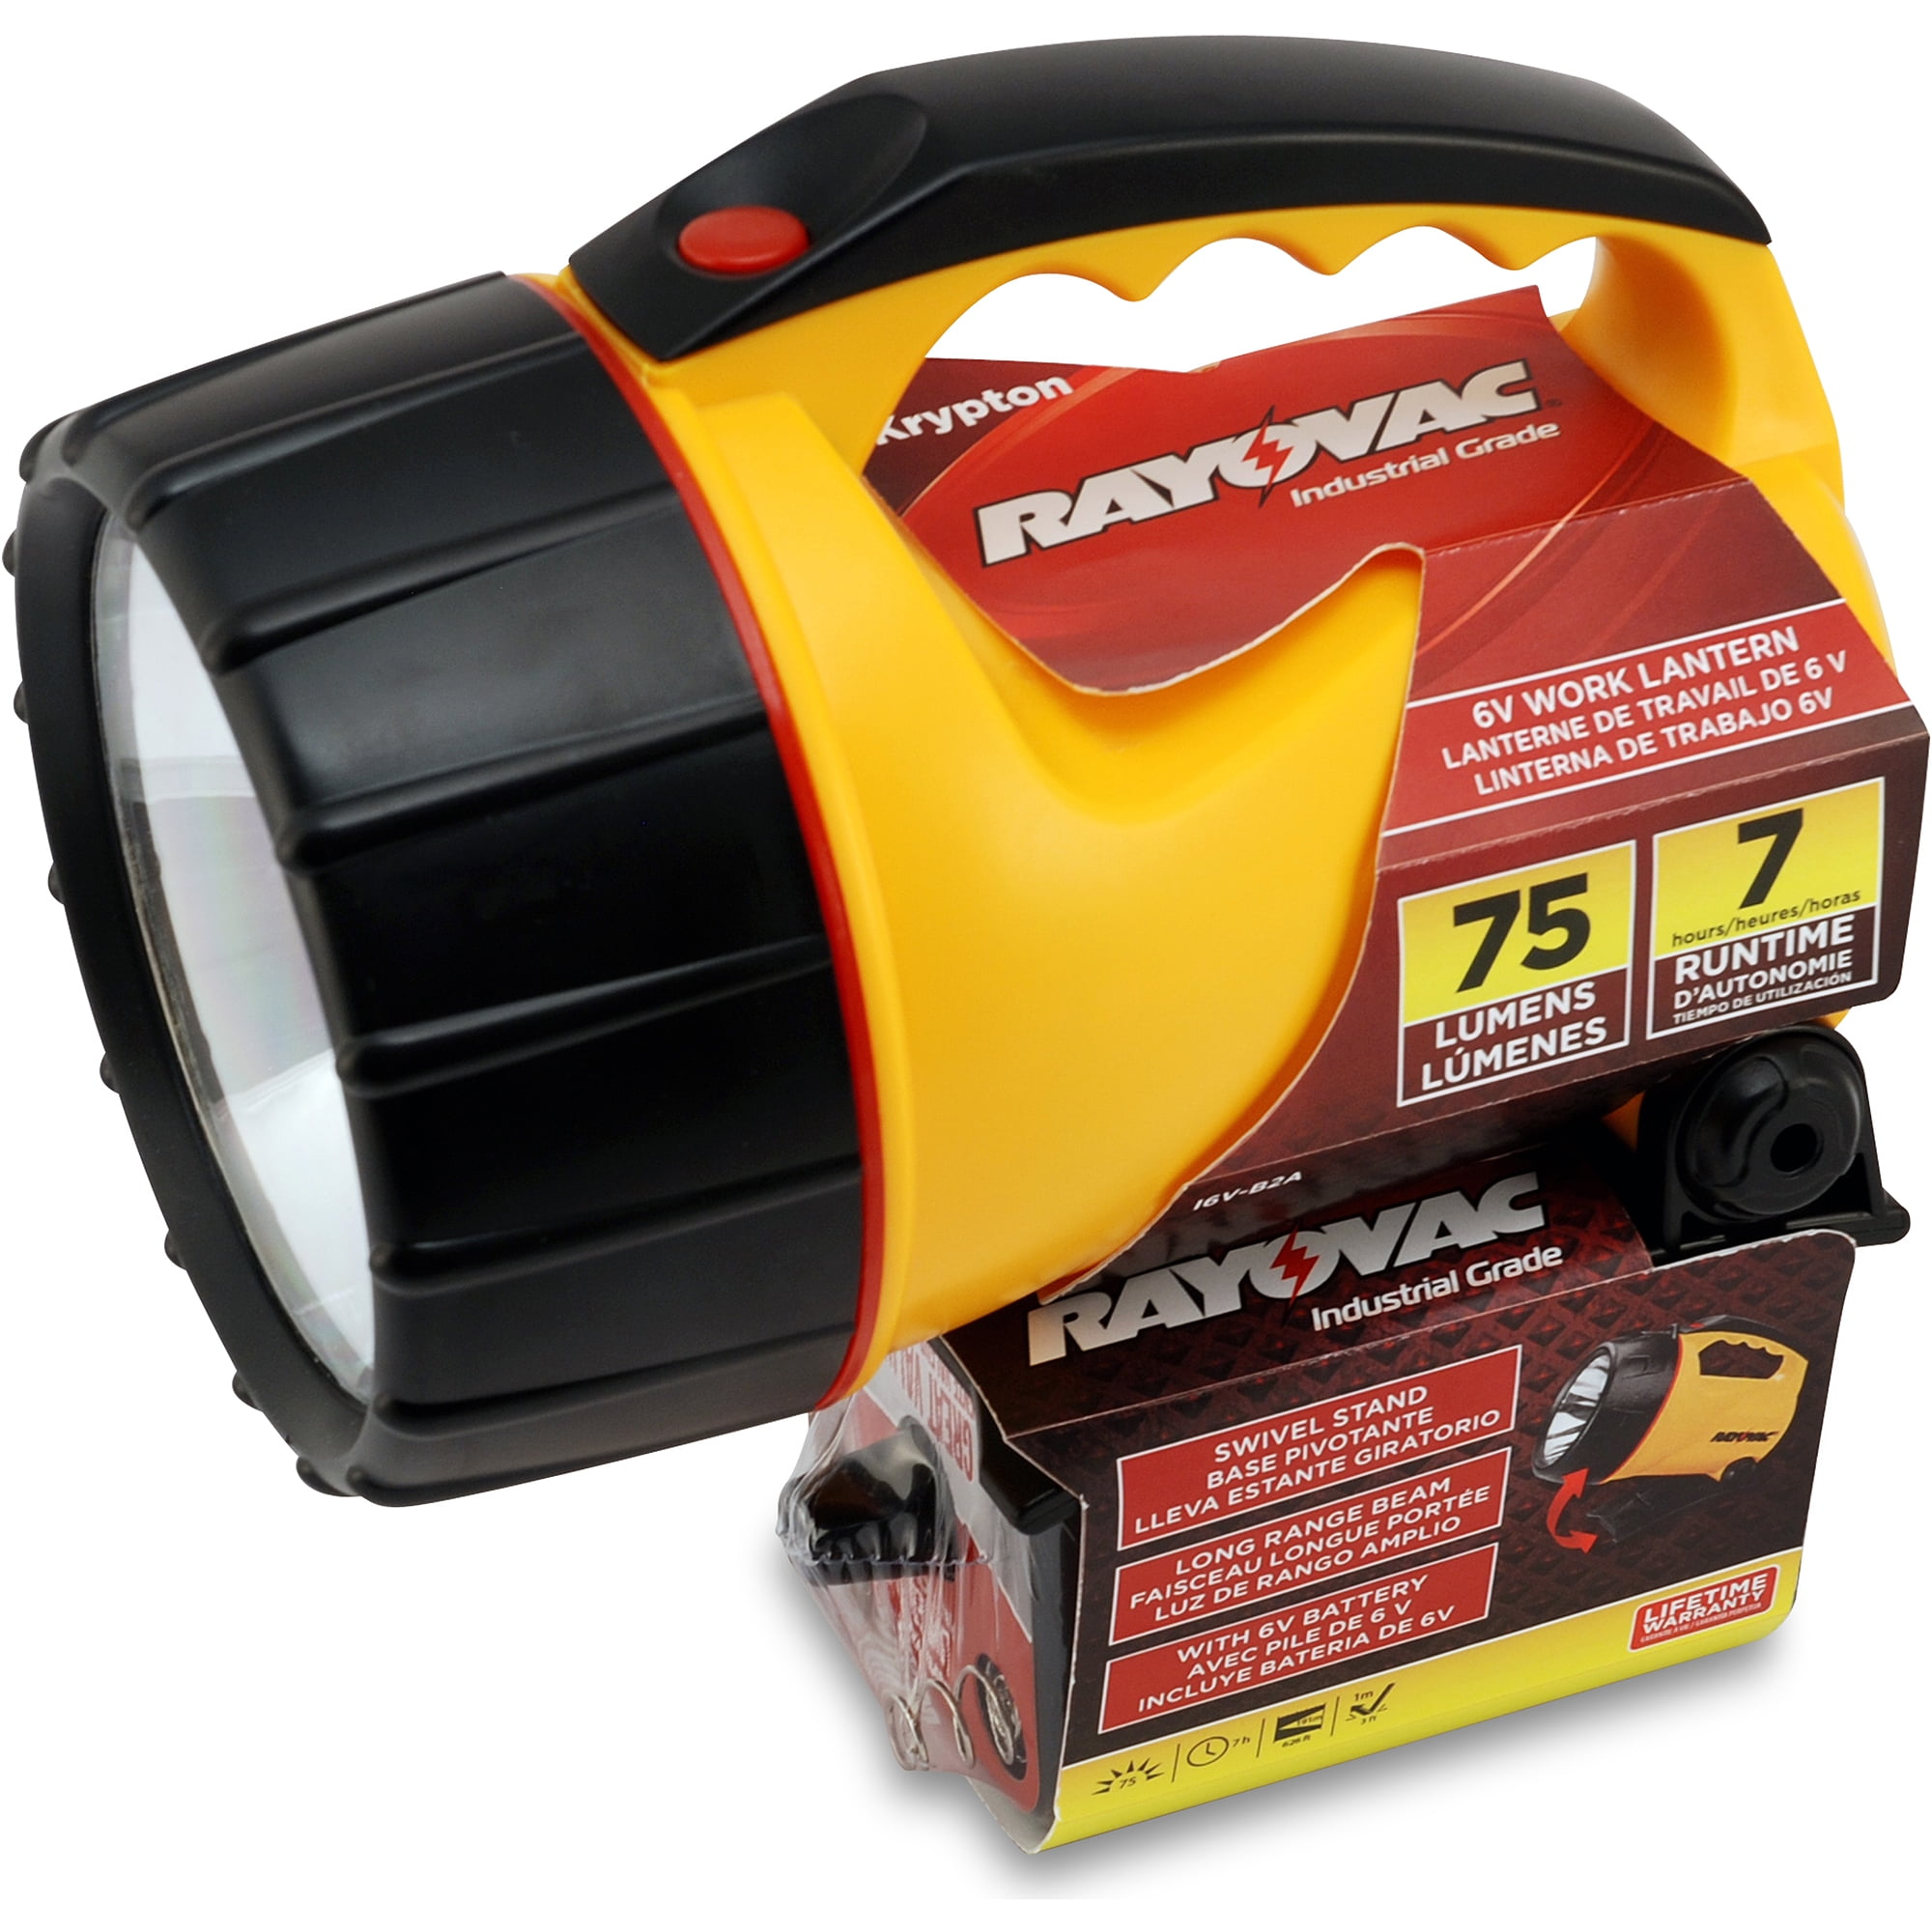 Rayovac 6V Lantern Battery Adapter 